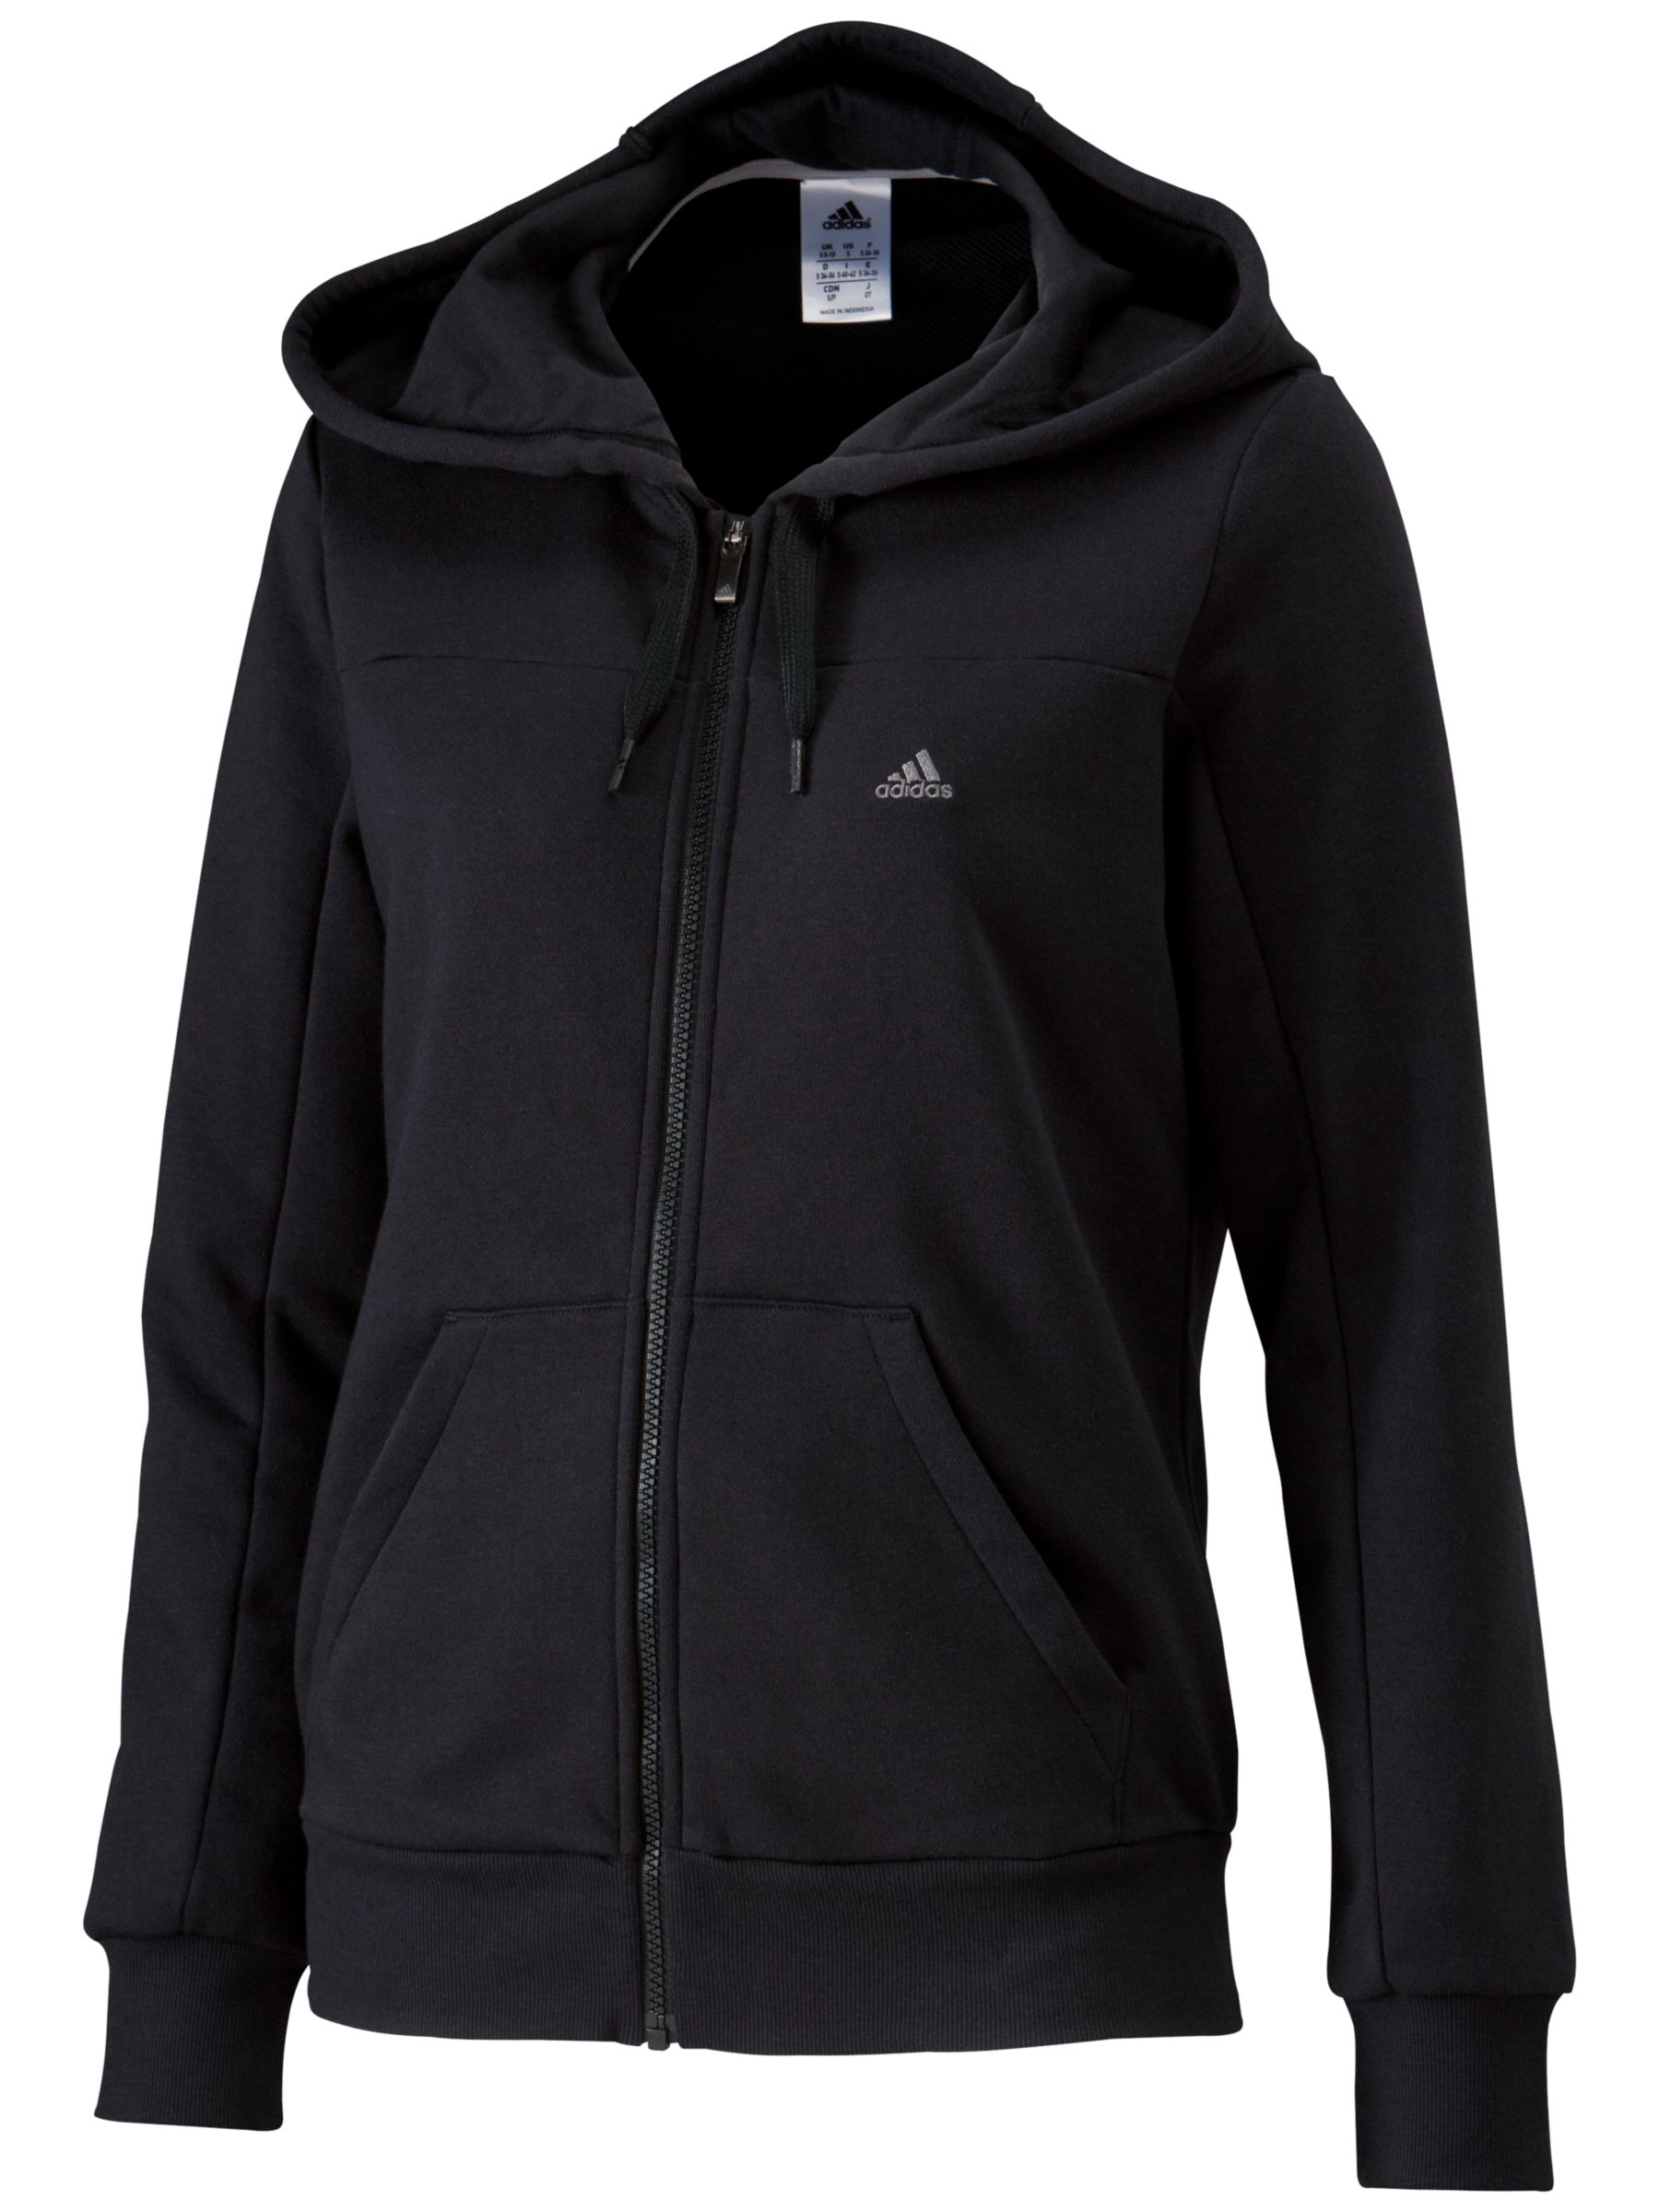 Adidas Essentials Long Sleeve Hooded Top, Black